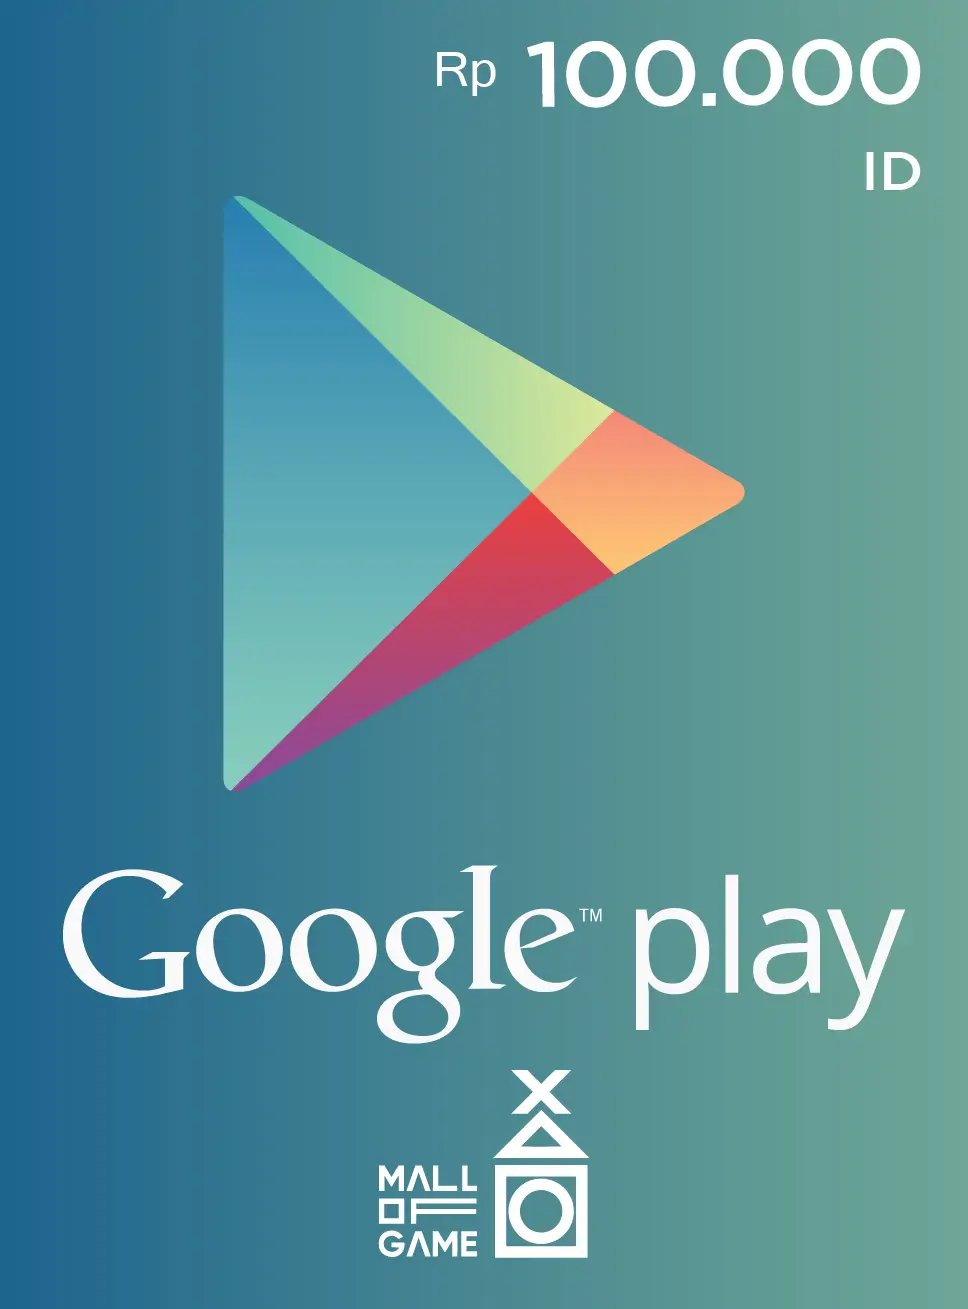 Google Play IDR100,000 Gift Card (ID)